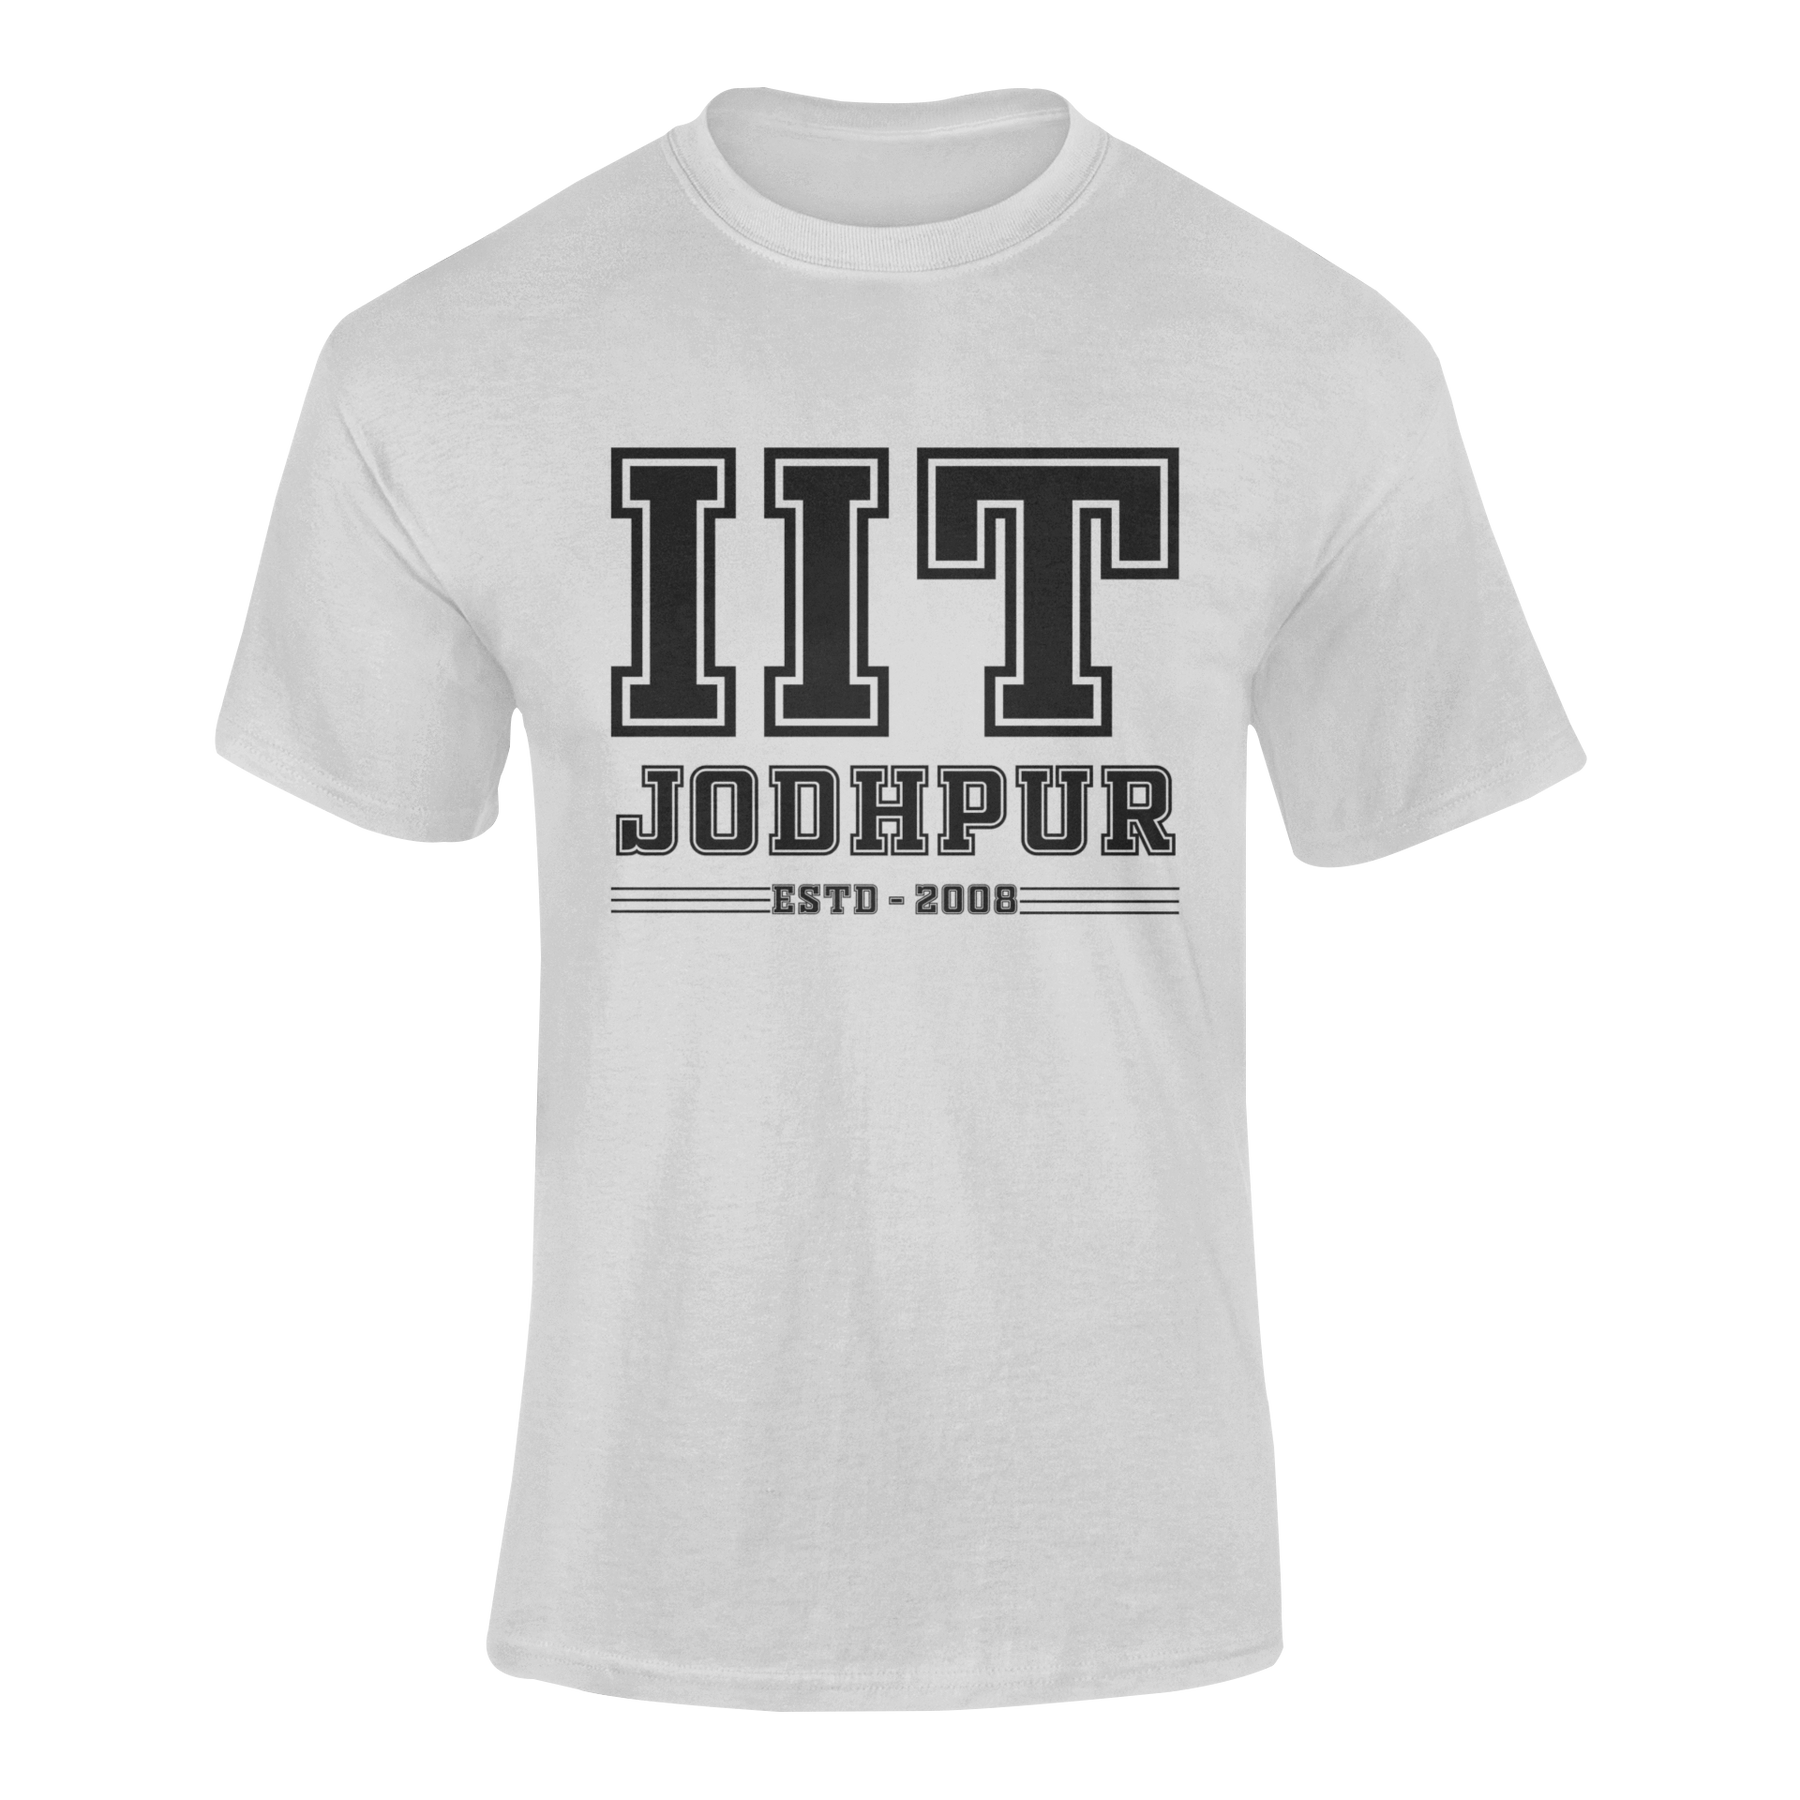 IIT JODHPUR - teeshood.com